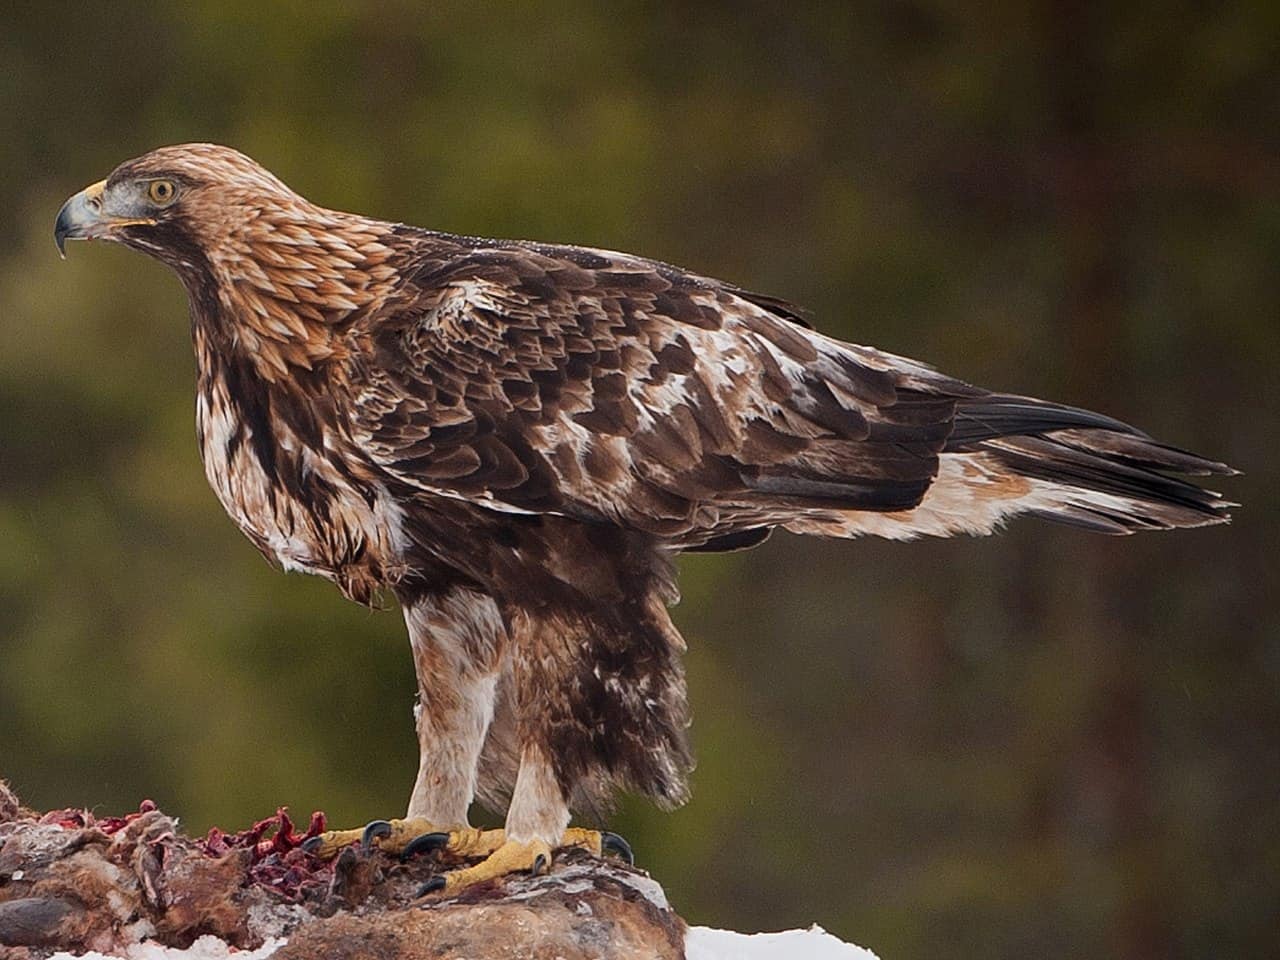 National Animal of Albania - The Golden Eagle